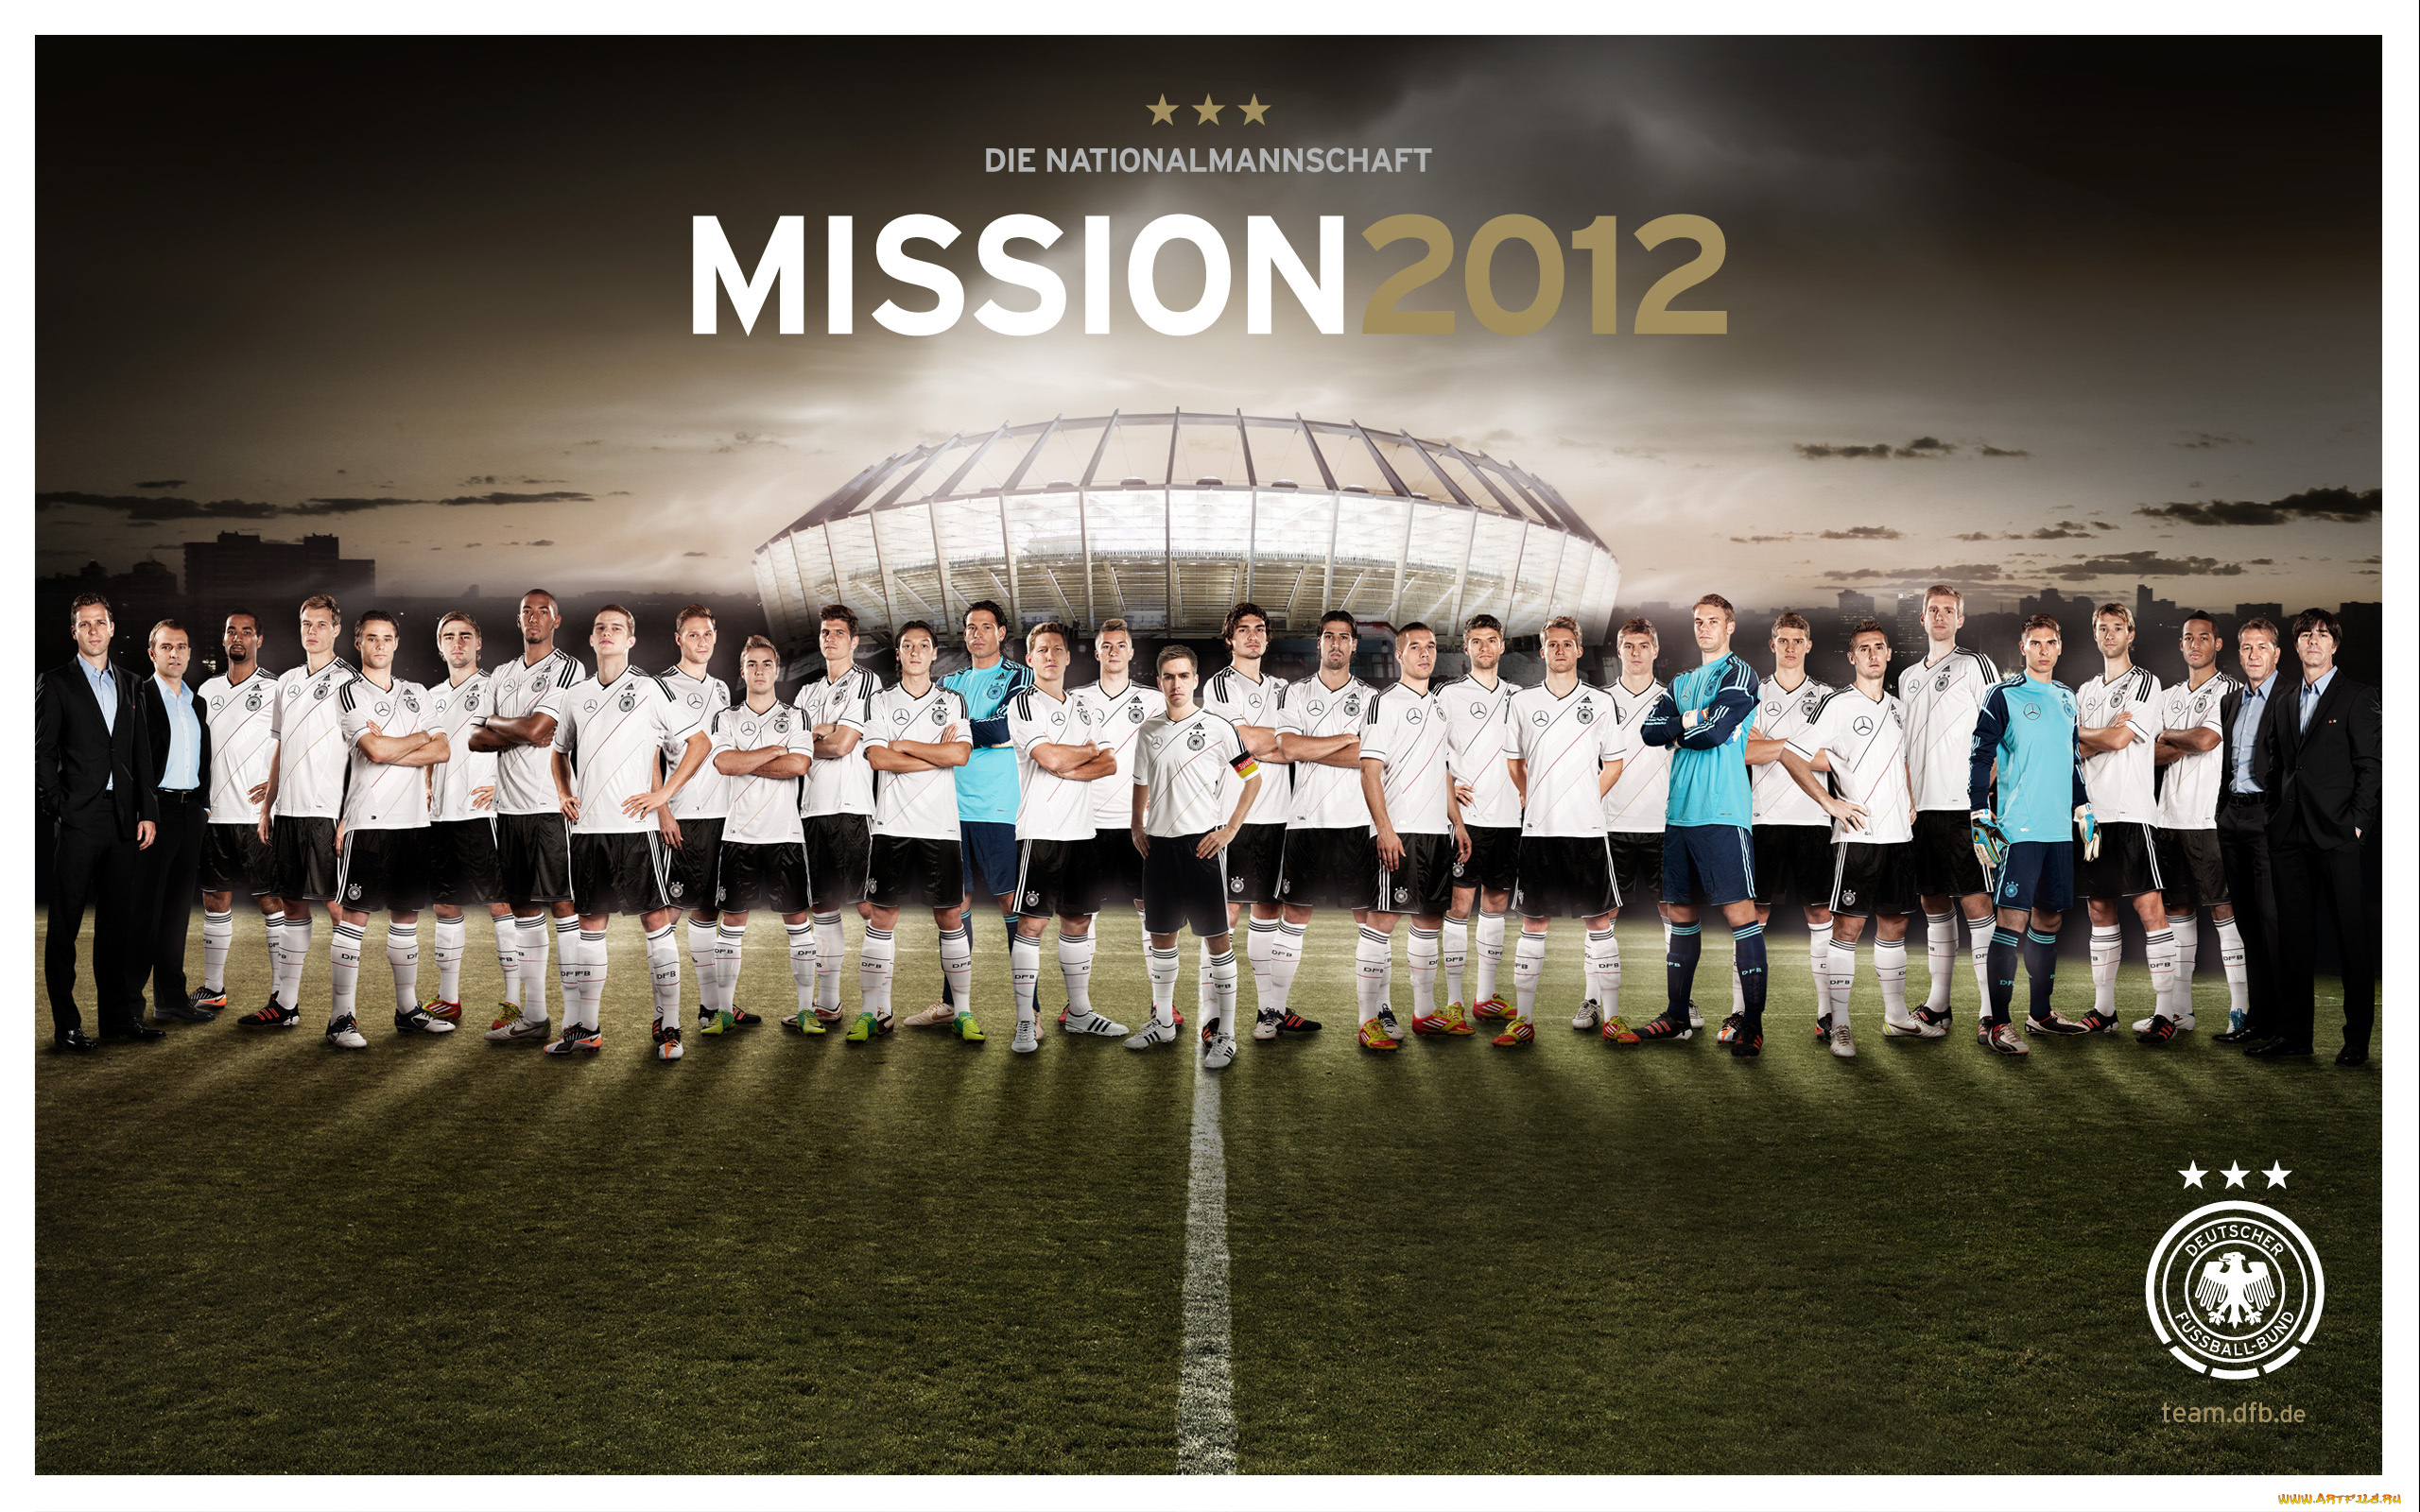 спорт, футбол, euro, 2012, cборная, fussball, soccer, германия, team, deutschland, dfb, mannschaft, germany